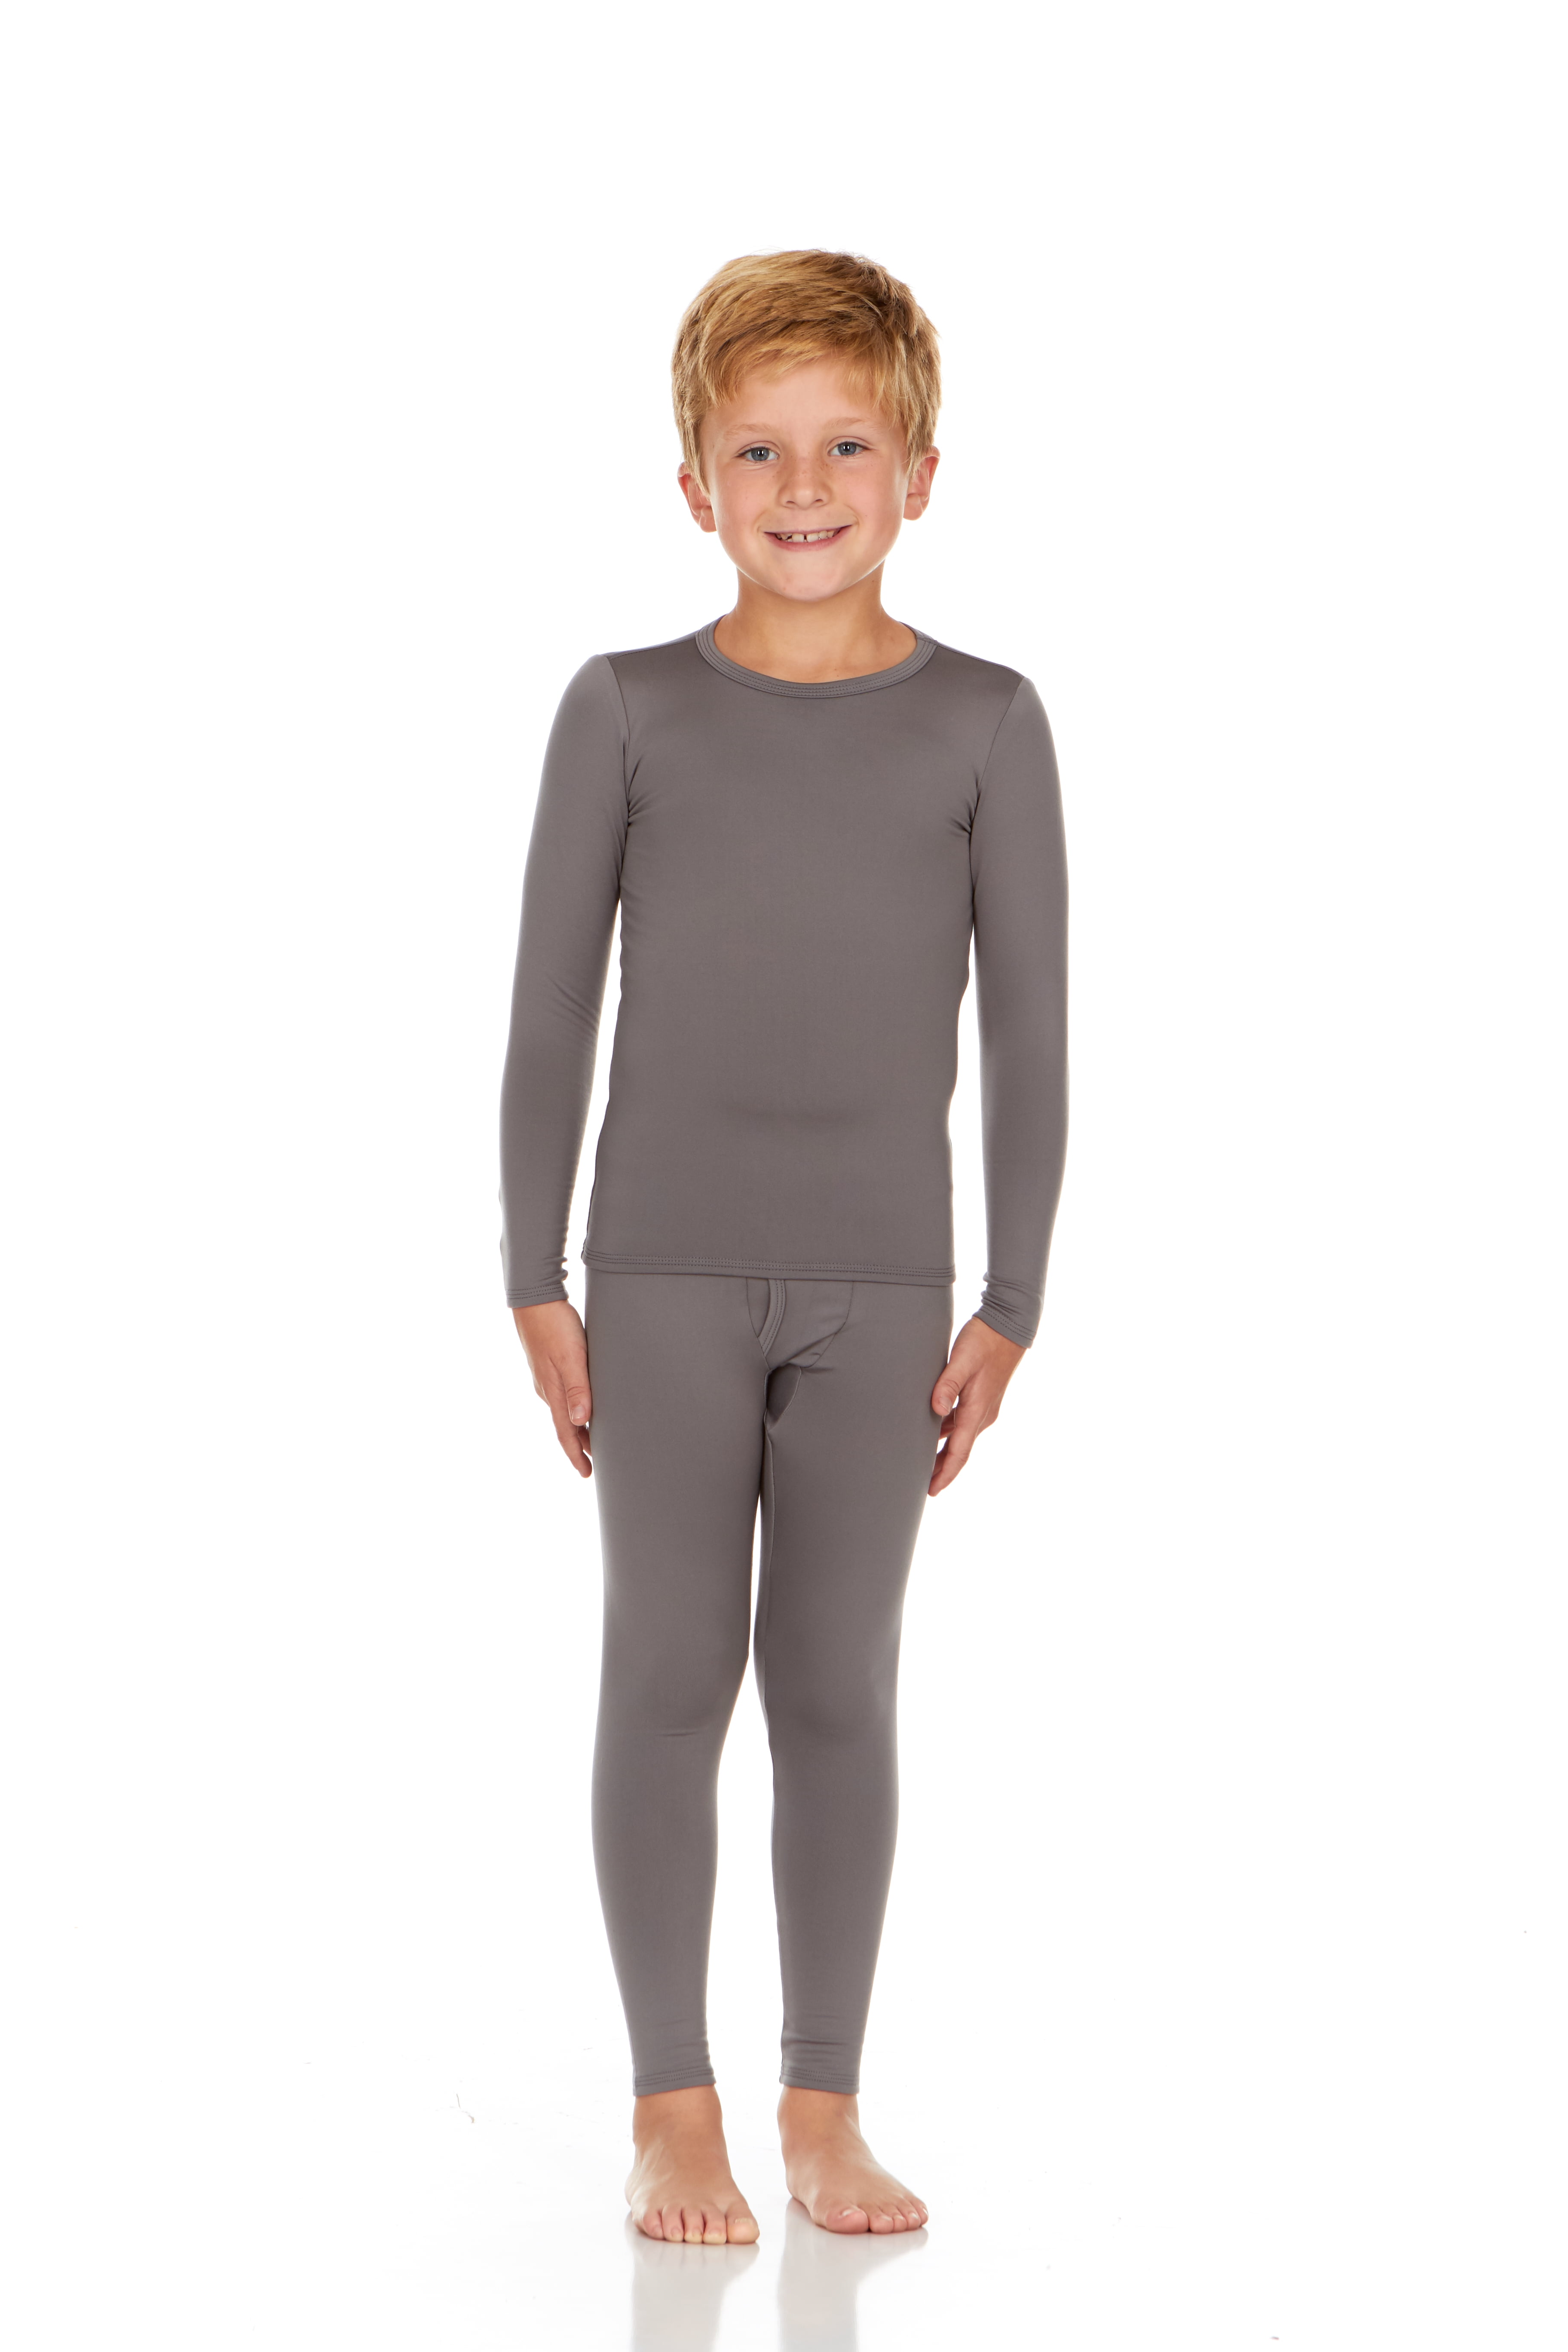 Thermajohn Thermal Underwear for Boys Long Johns Set Kids (Grey, Large ...